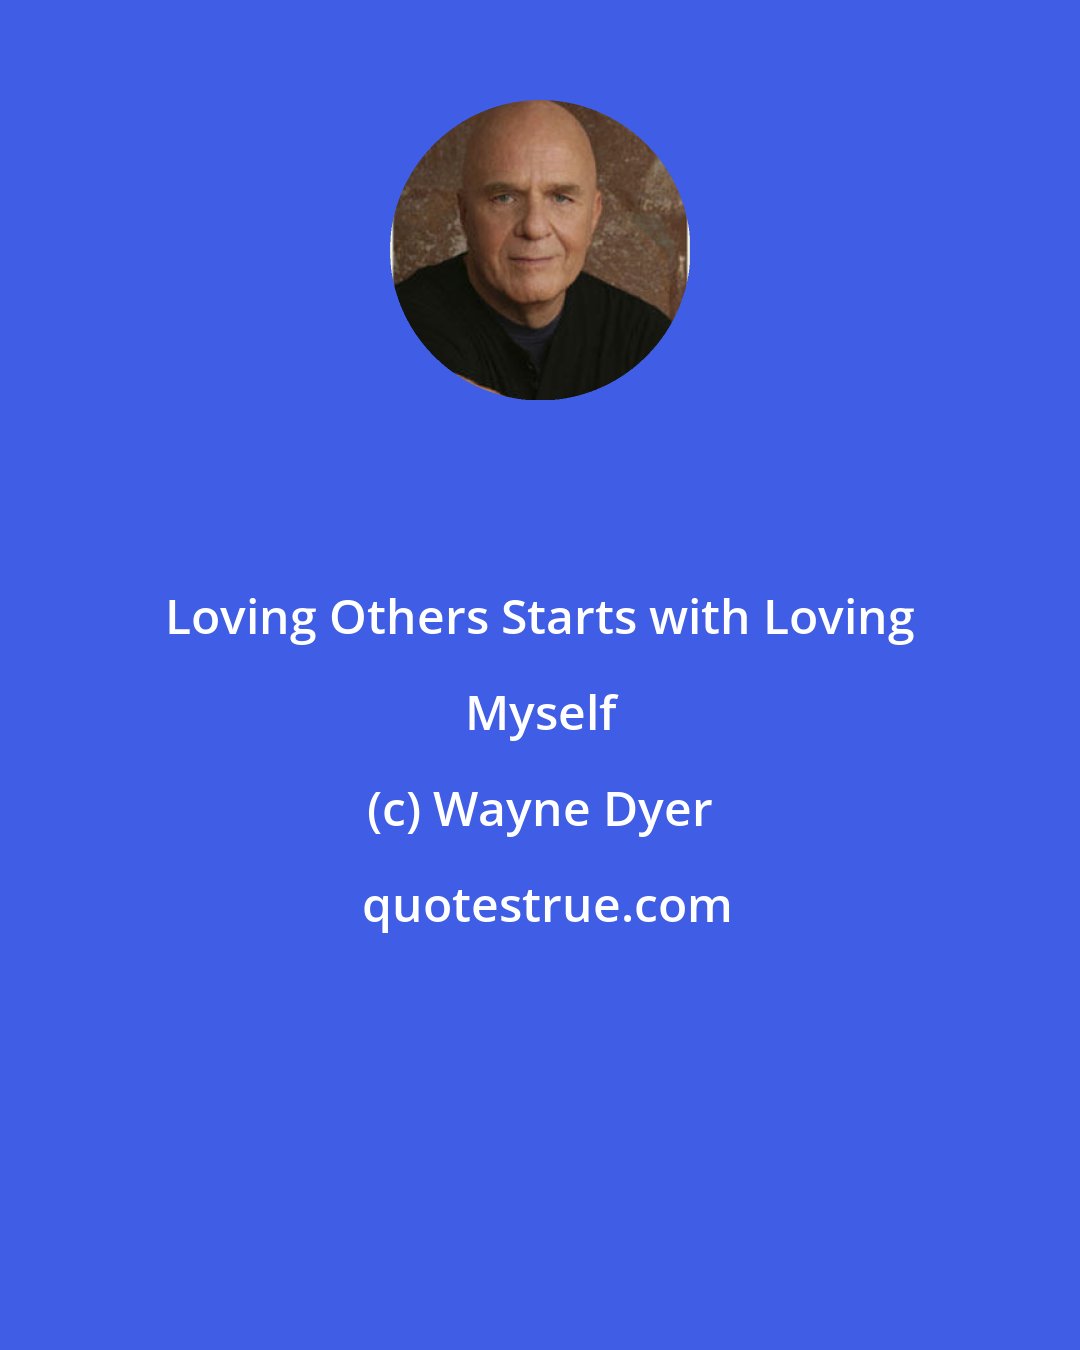 Wayne Dyer: Loving Others Starts with Loving Myself